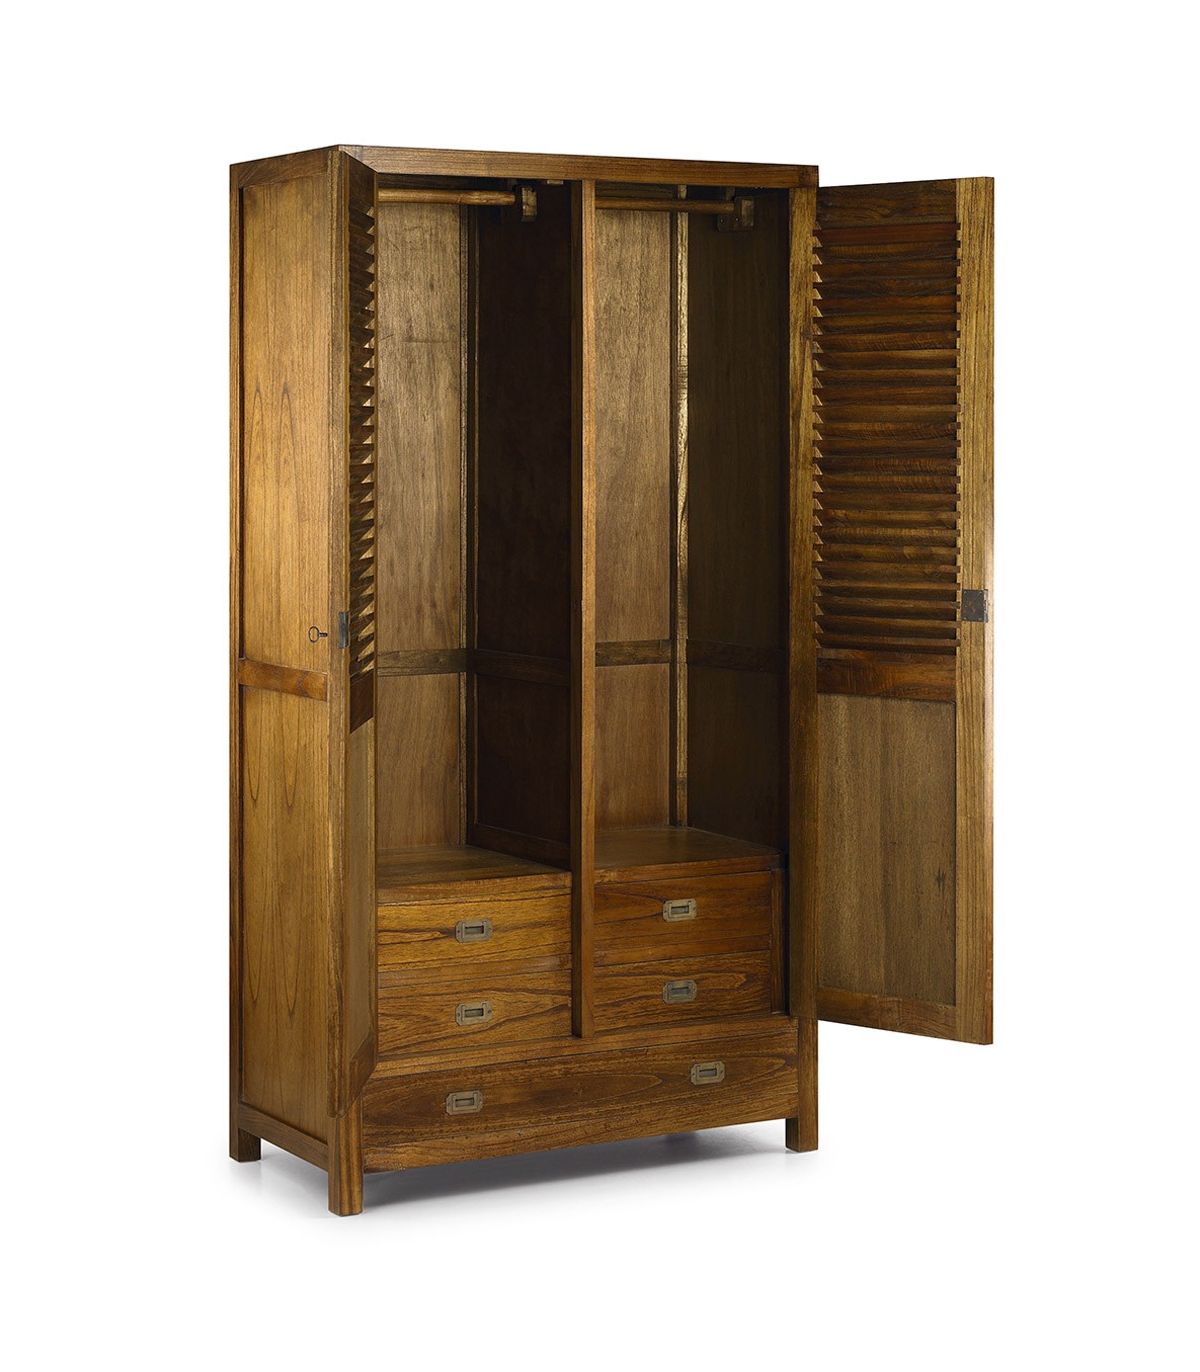 Tirador de madera para muebles de cocina, tiradores nórdicos de madera  maciza para armarios y cajones